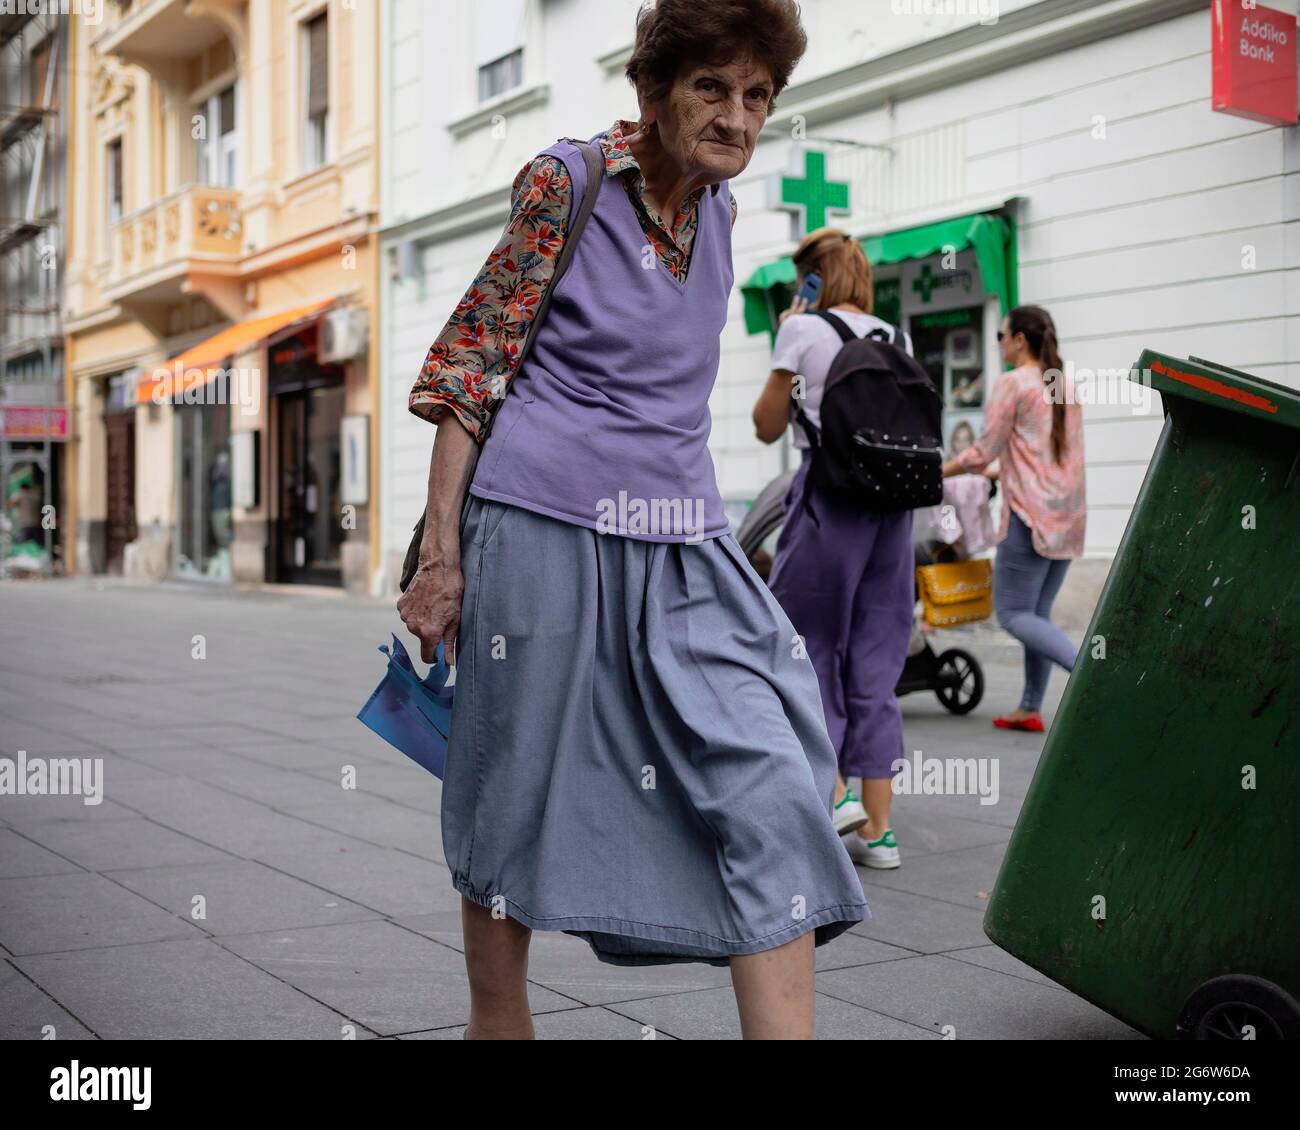 Belgrade, Serbia, Sep 12, 2019: Elderly woman walking down the street Stock Photo